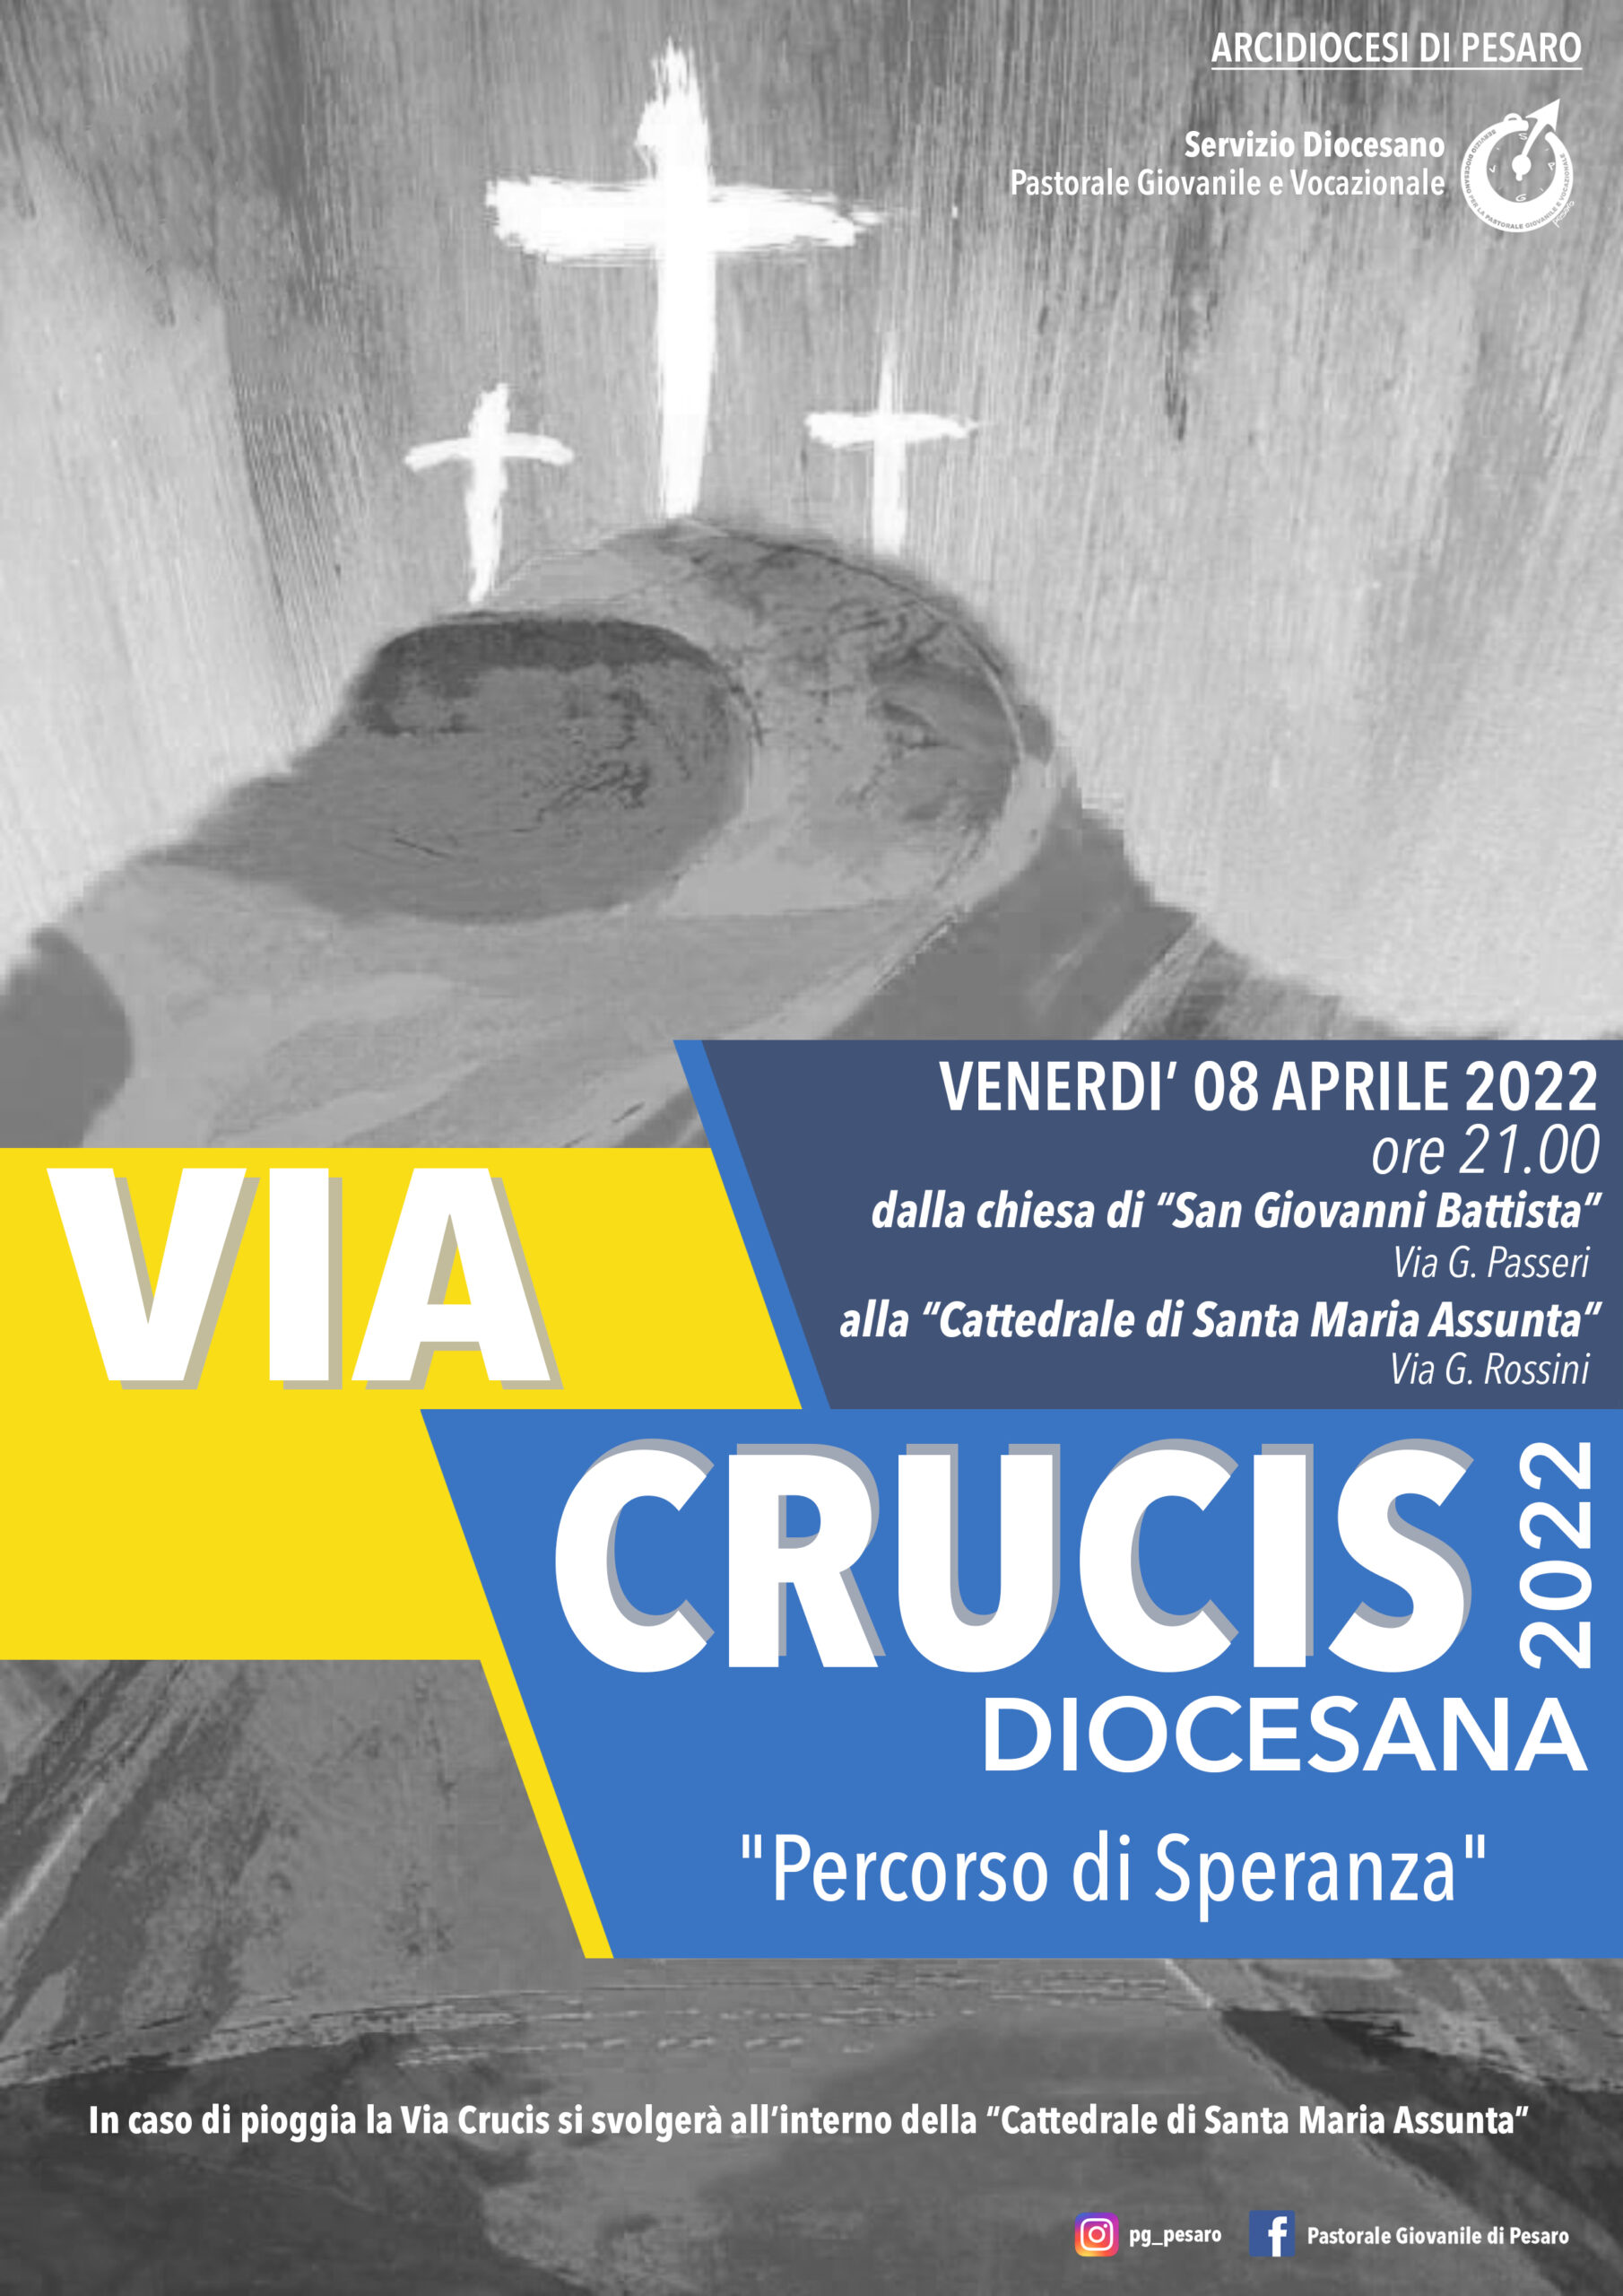 VIA CRUCIS DIOCESANA “Percorso di speranza” – Venerdì 8 aprile 2022